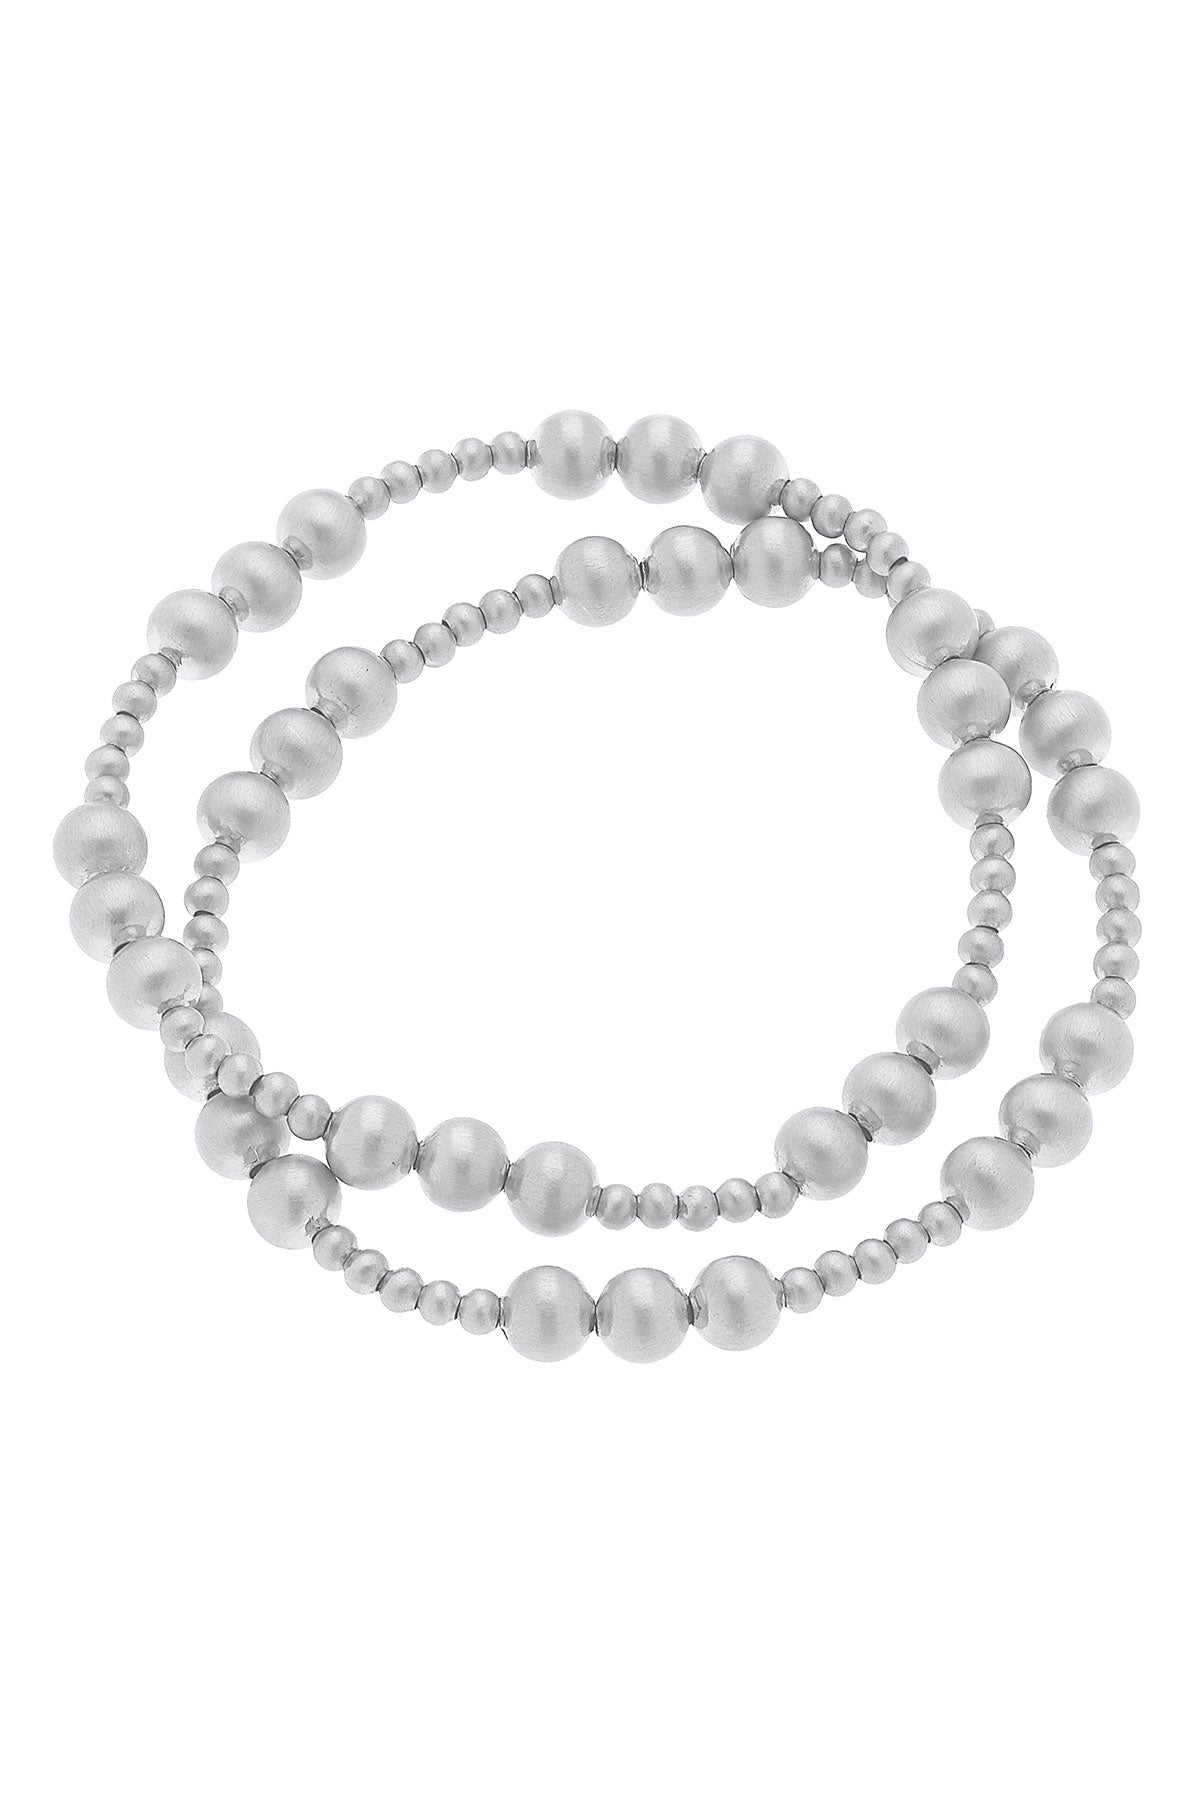 Kimber Ball Bead Stretch Bracelets (Set of 2) in Satin Silver